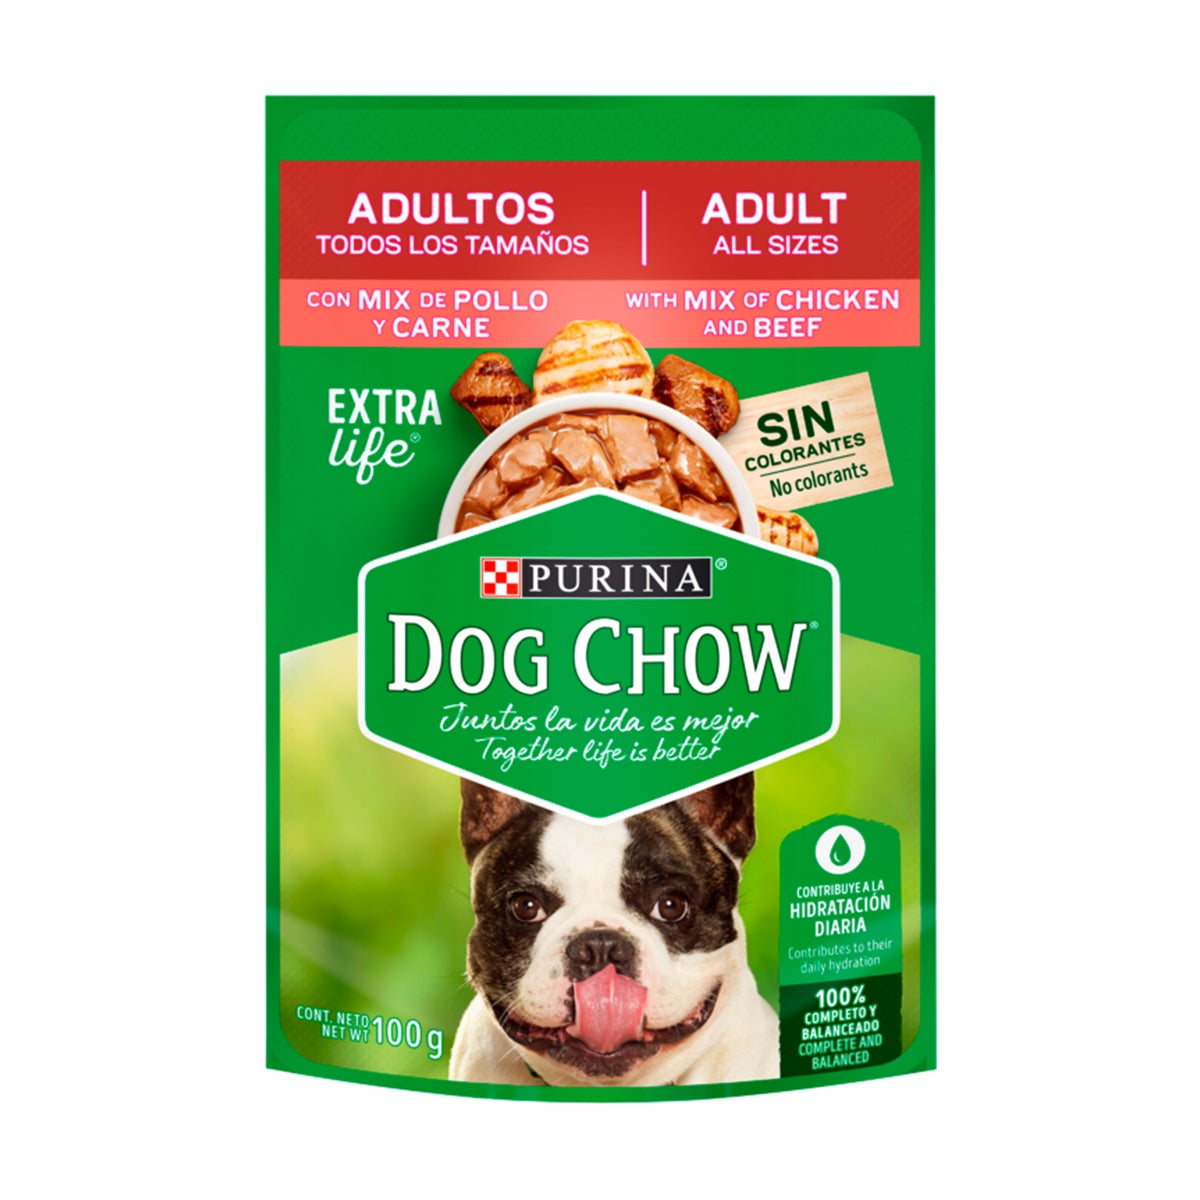 purina-dog-chow-alimento-h%C3%BAmedo-todos-los-tama%C3%B1os-mix-de-pollo-y-carne.jpg